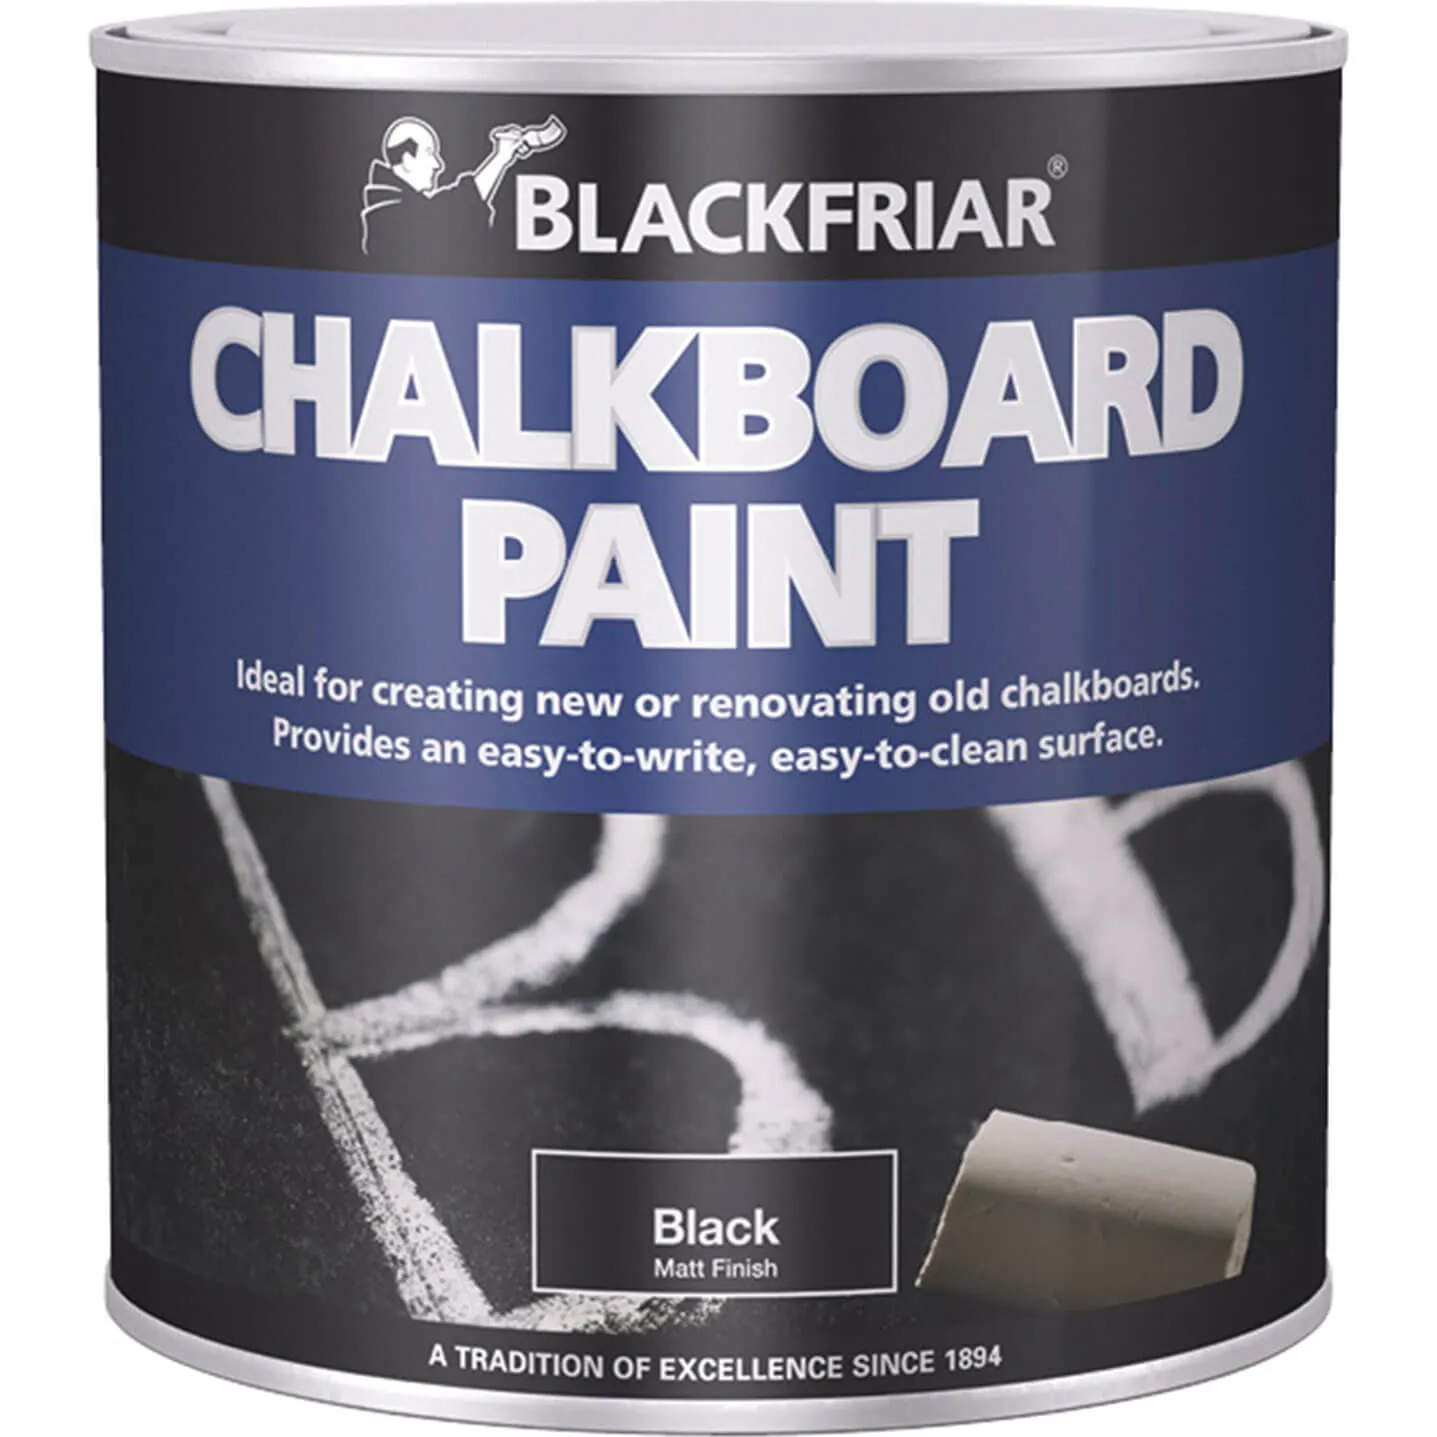 Blackfriar Chalkboard Paint for Renovating or Creating Chalkboards - Black, 250ml